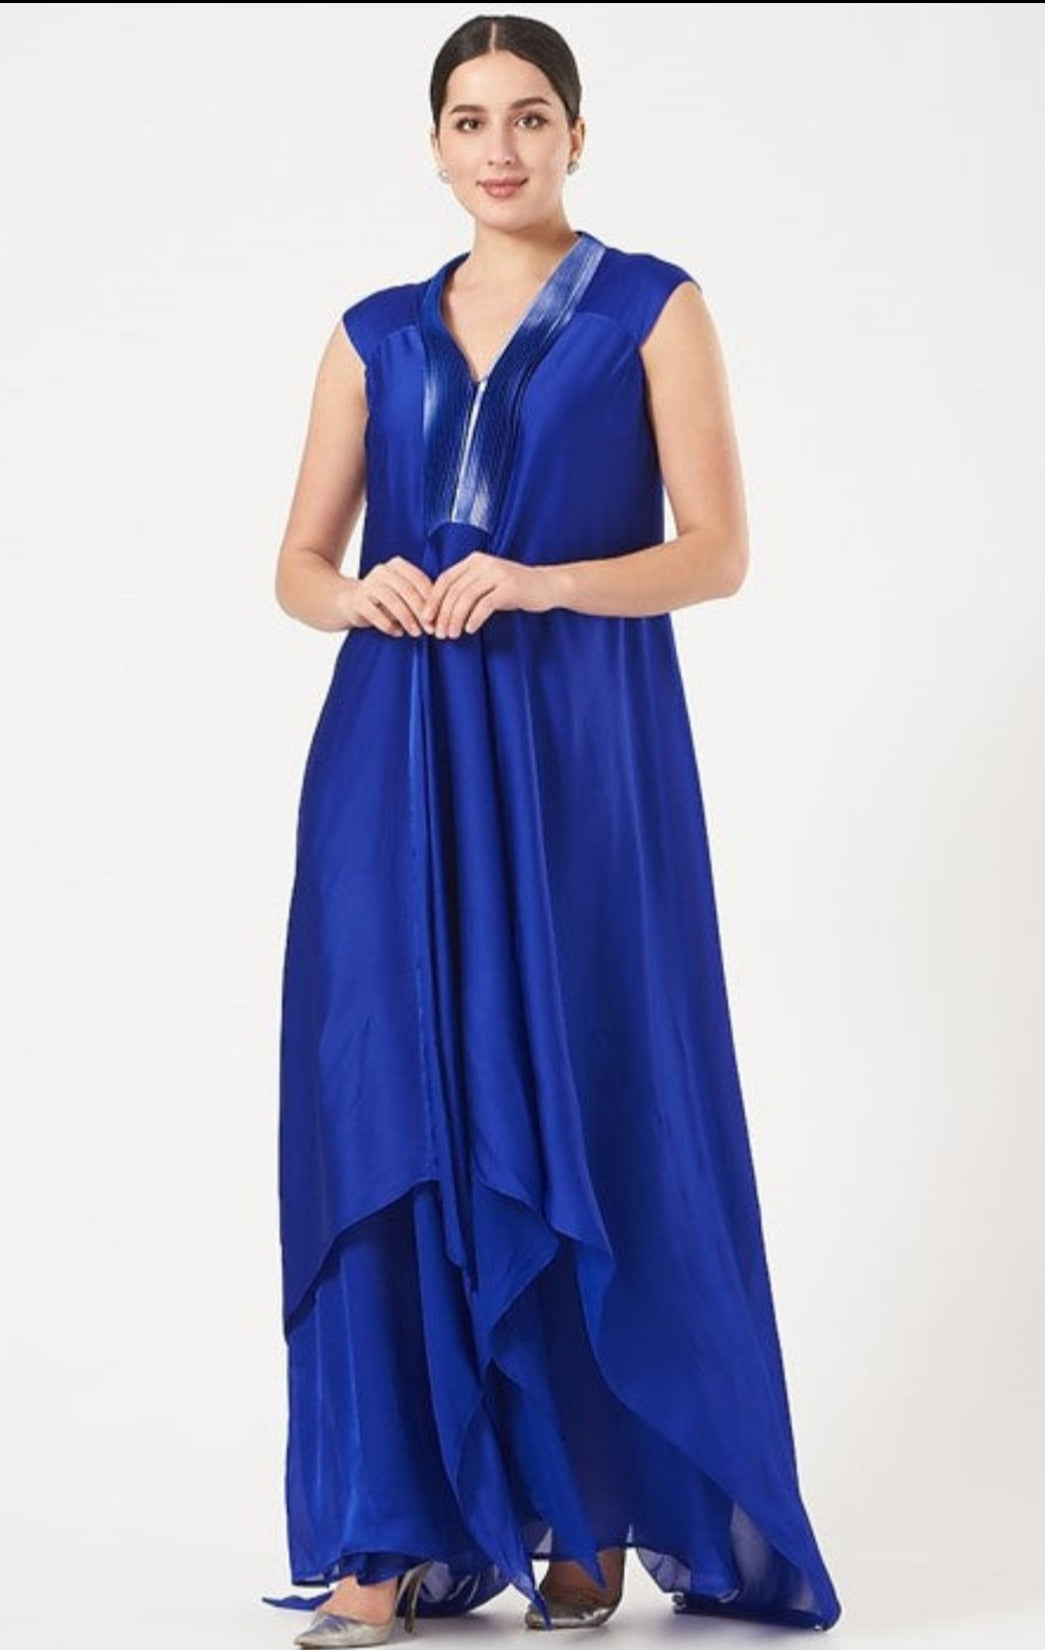 Cobalt Blue Draped Dress